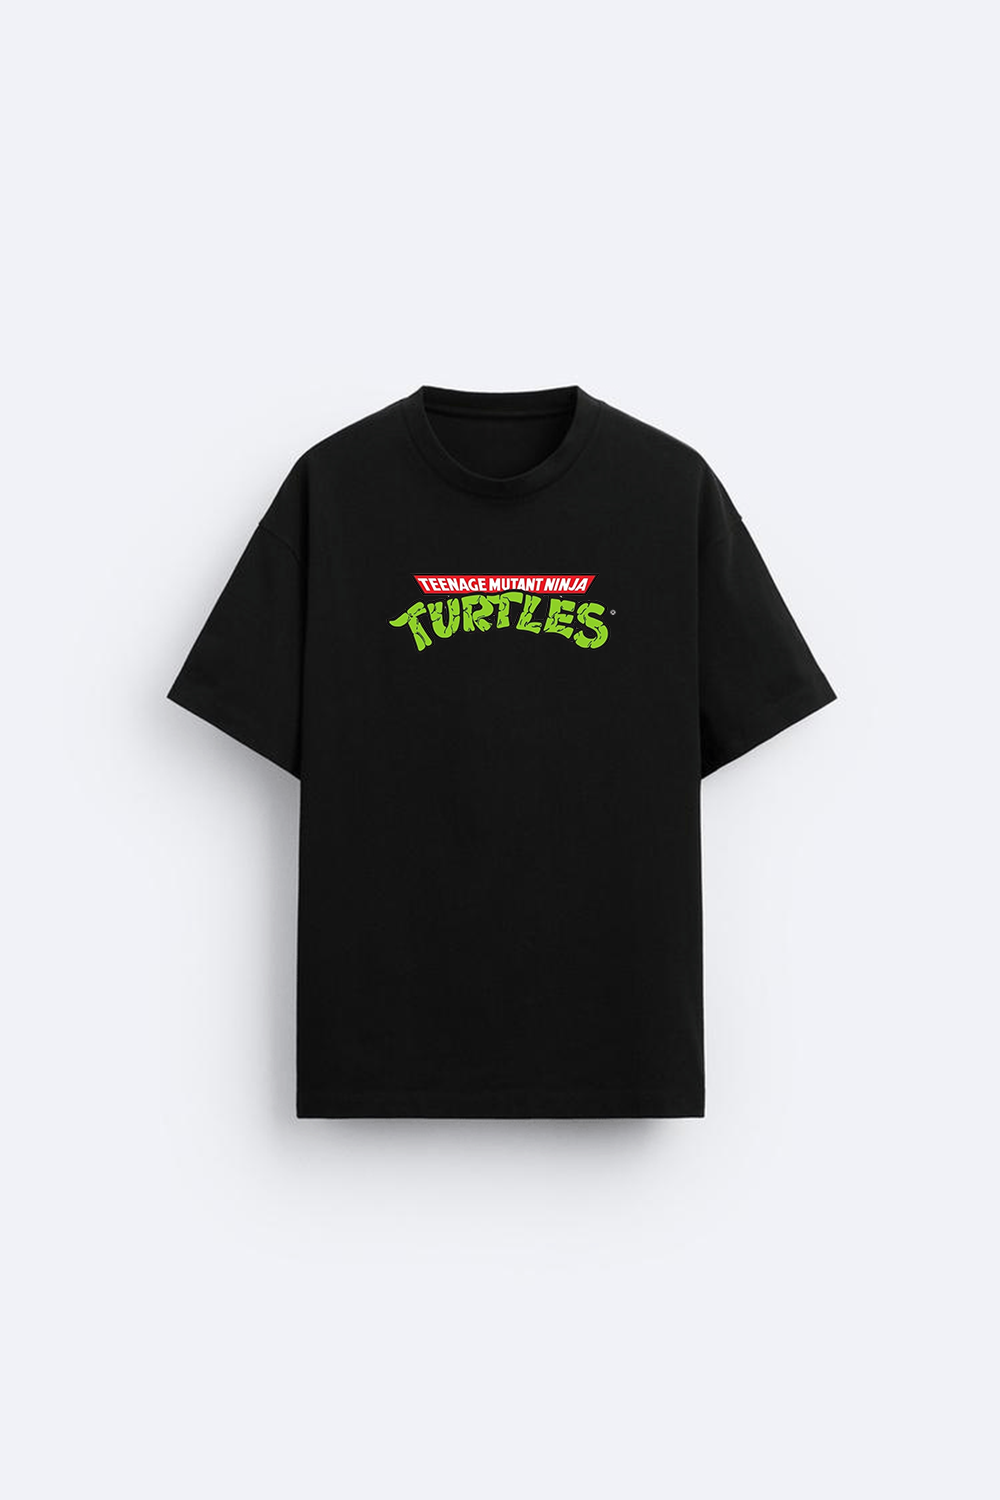 Ninja turtles printed t-shirt